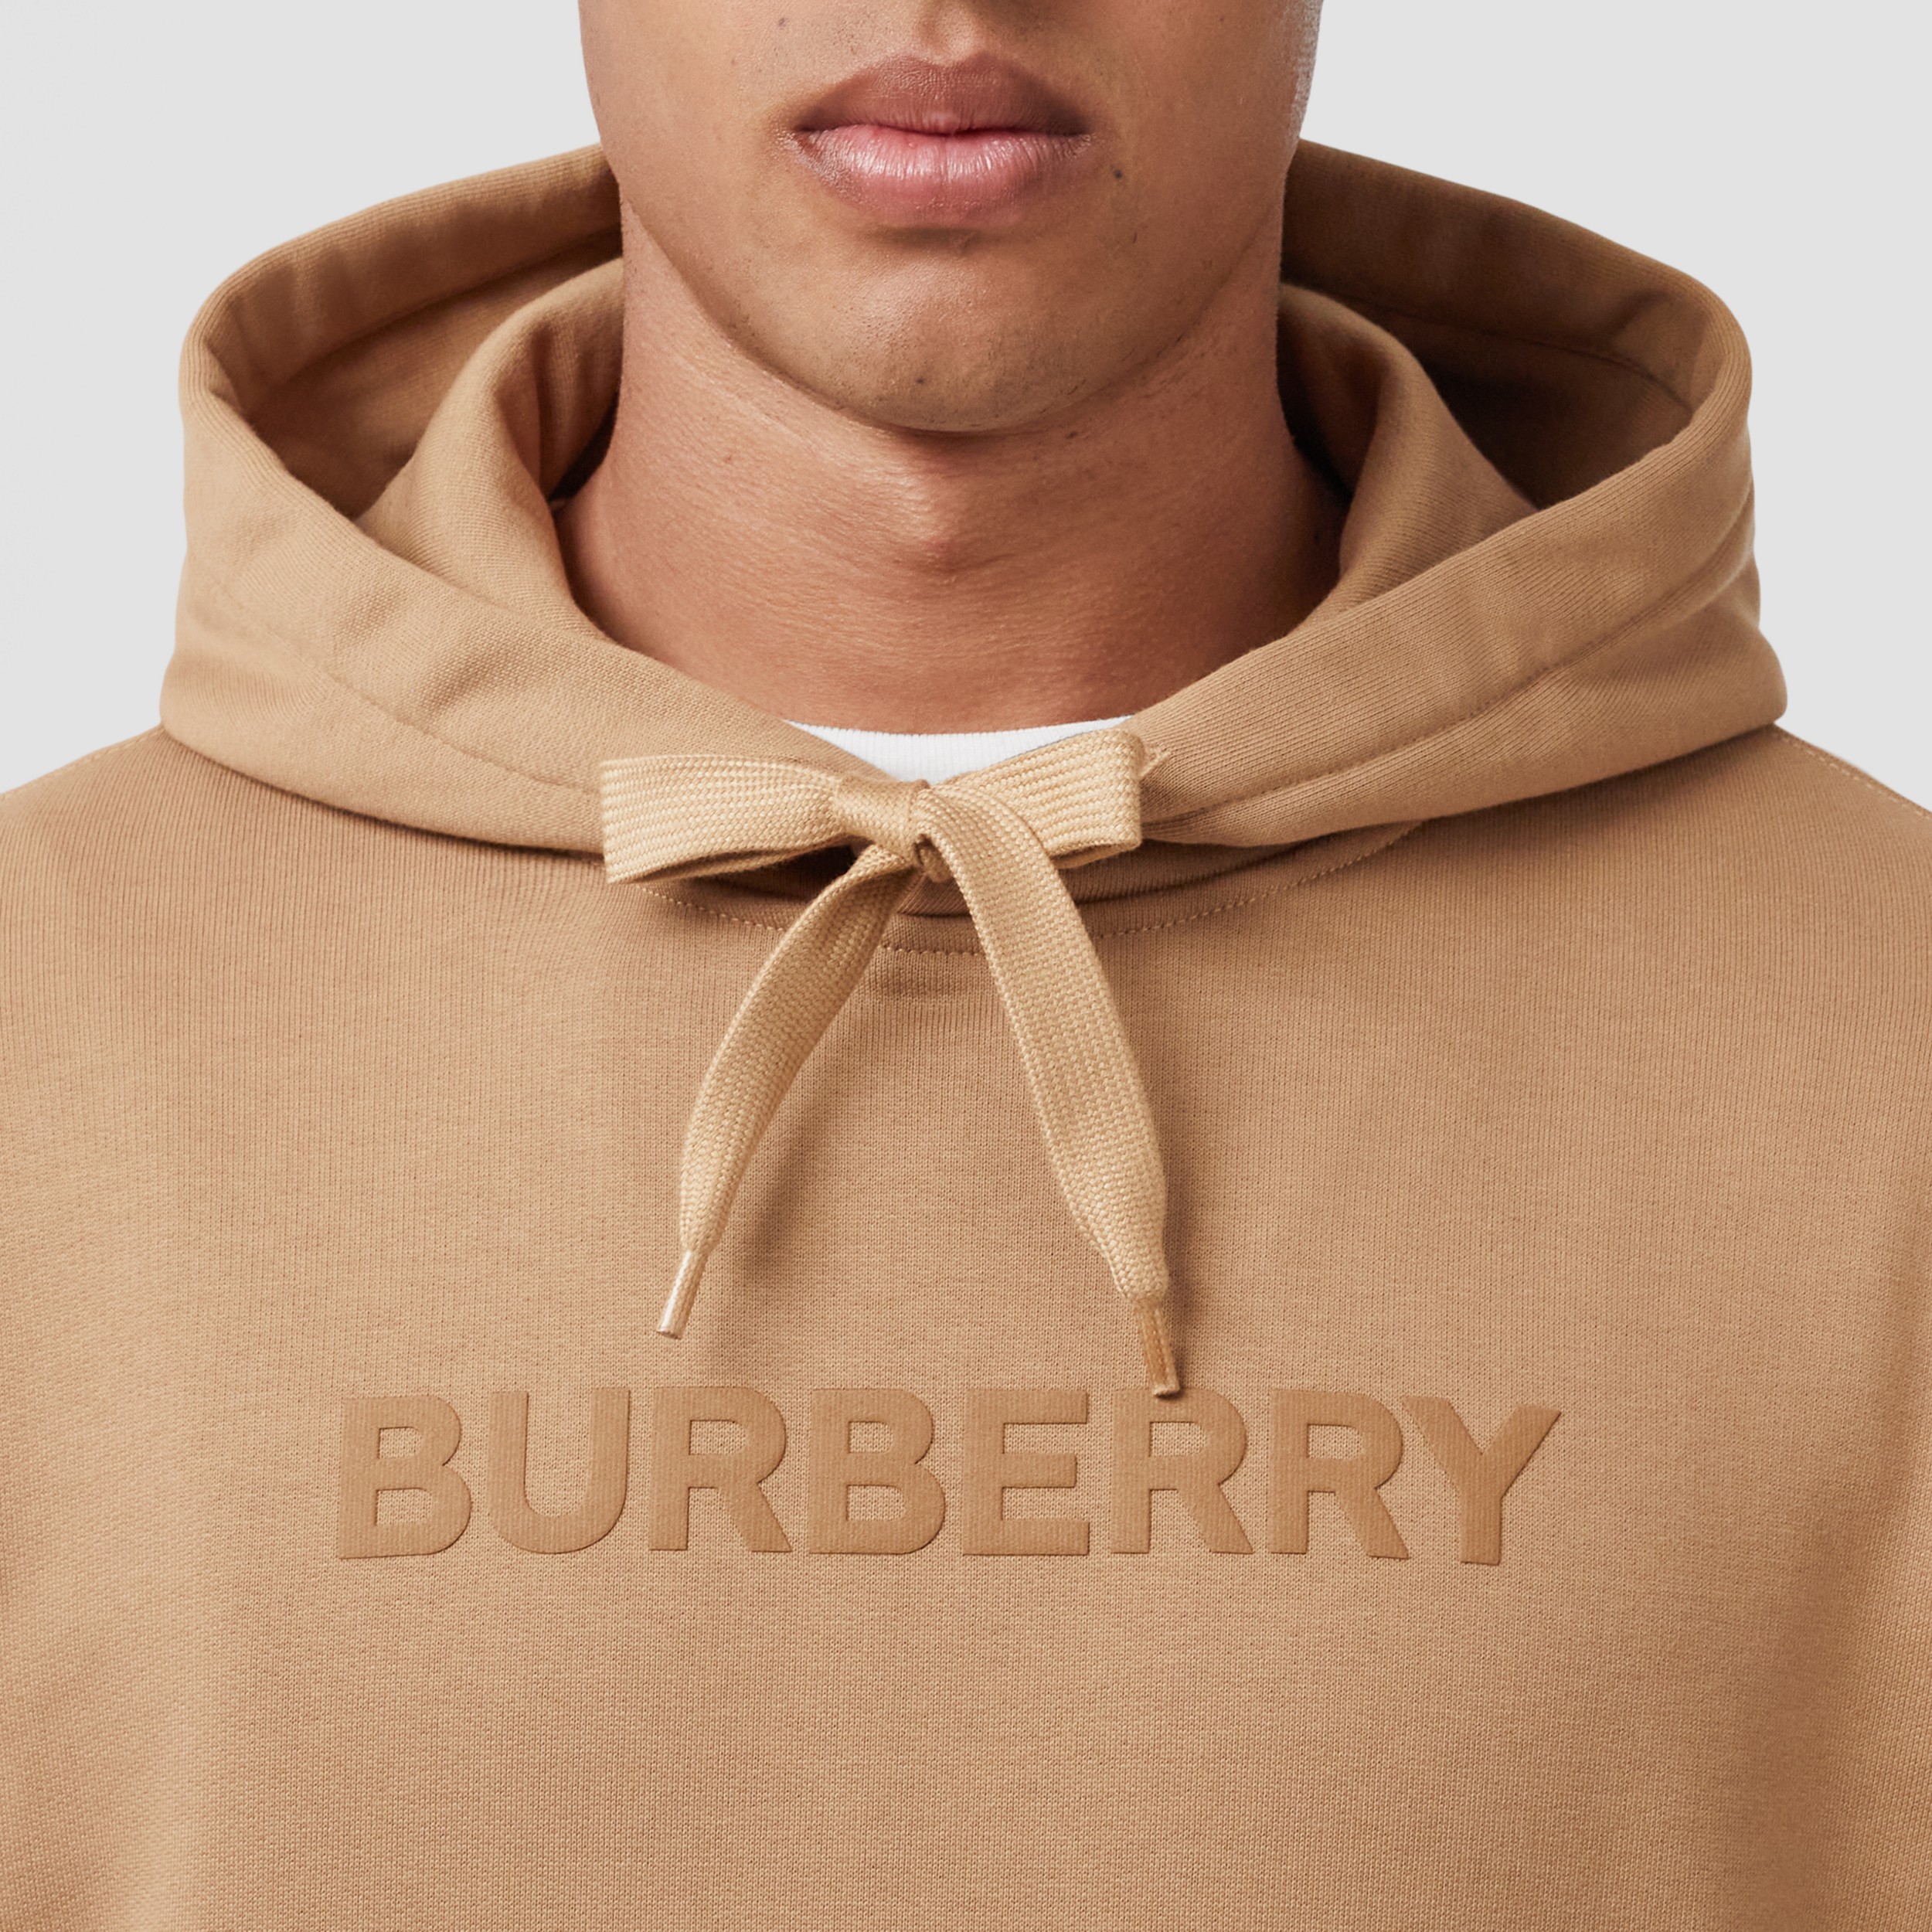 Baumwoll-Kapuzenpullover mit Burberry-Logo (Camelfarben) - Herren | Burberry® - 2